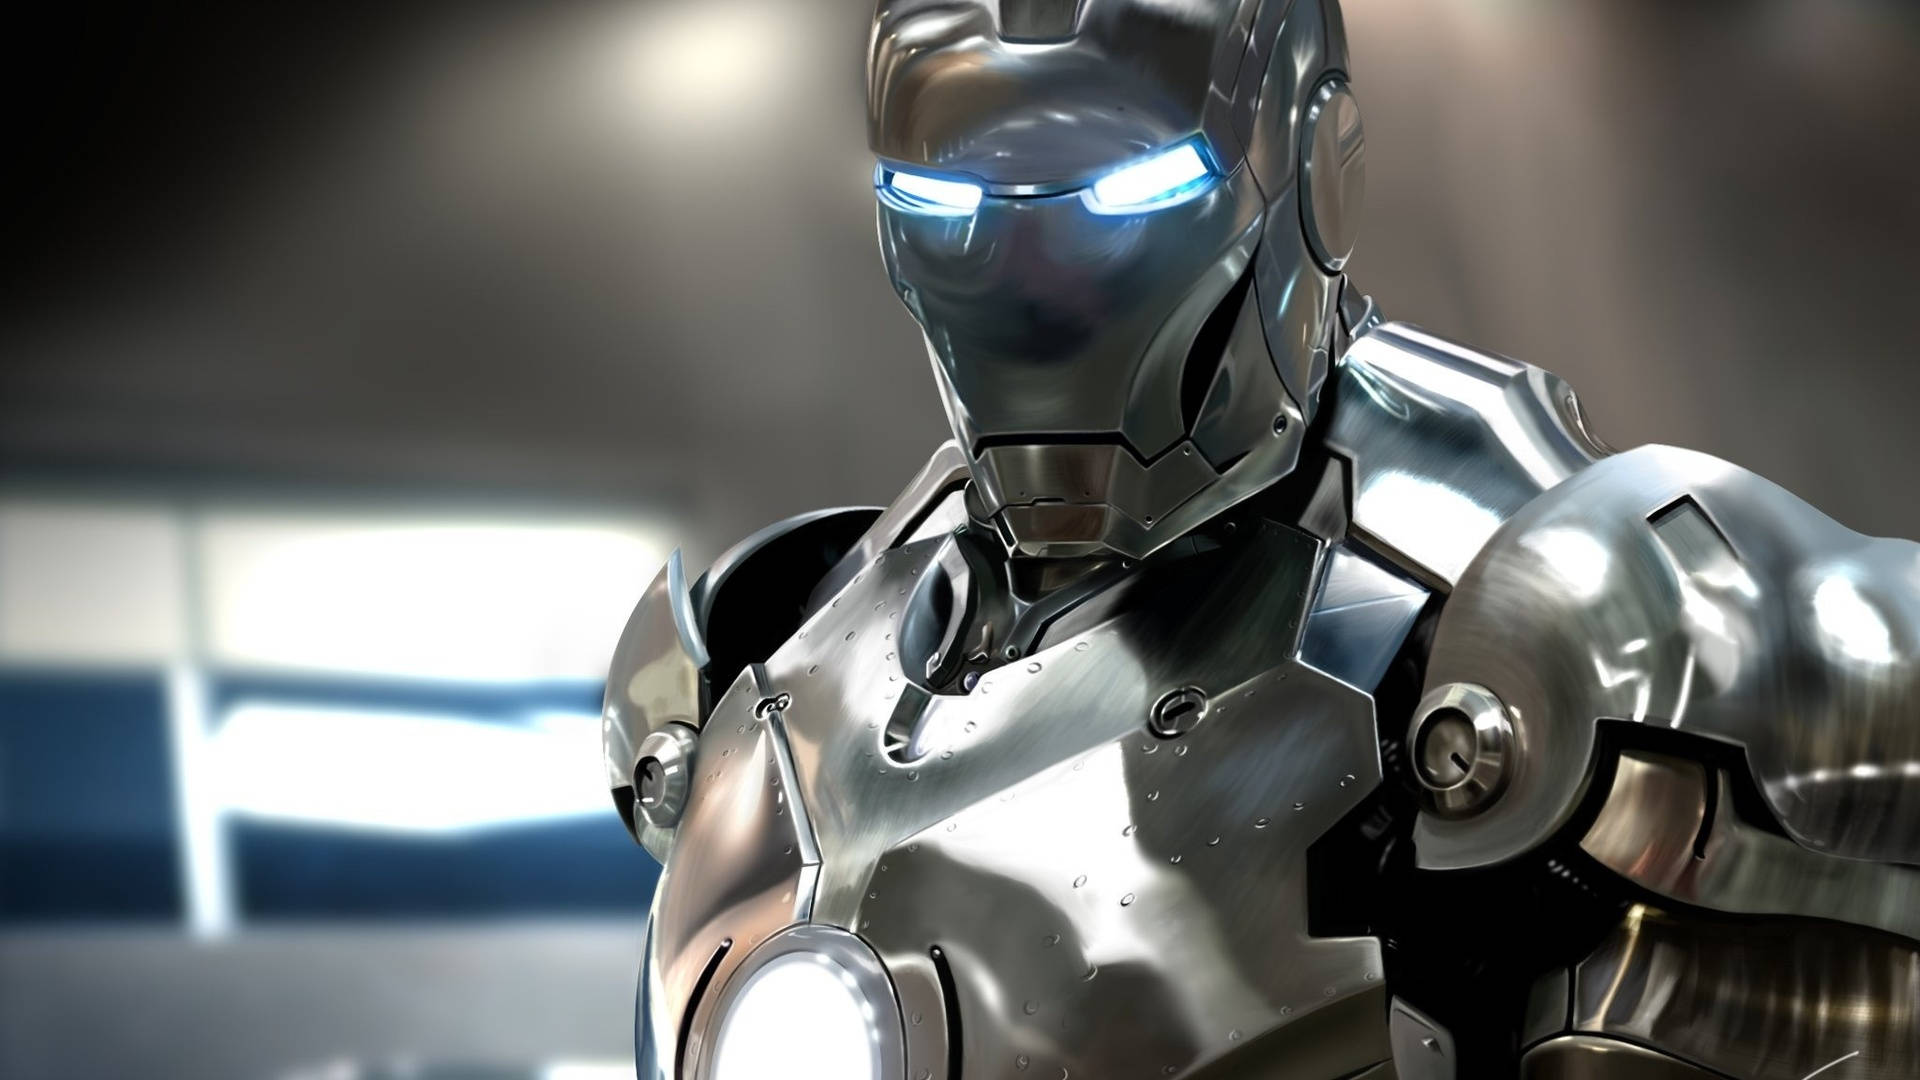 Iron Man Robot